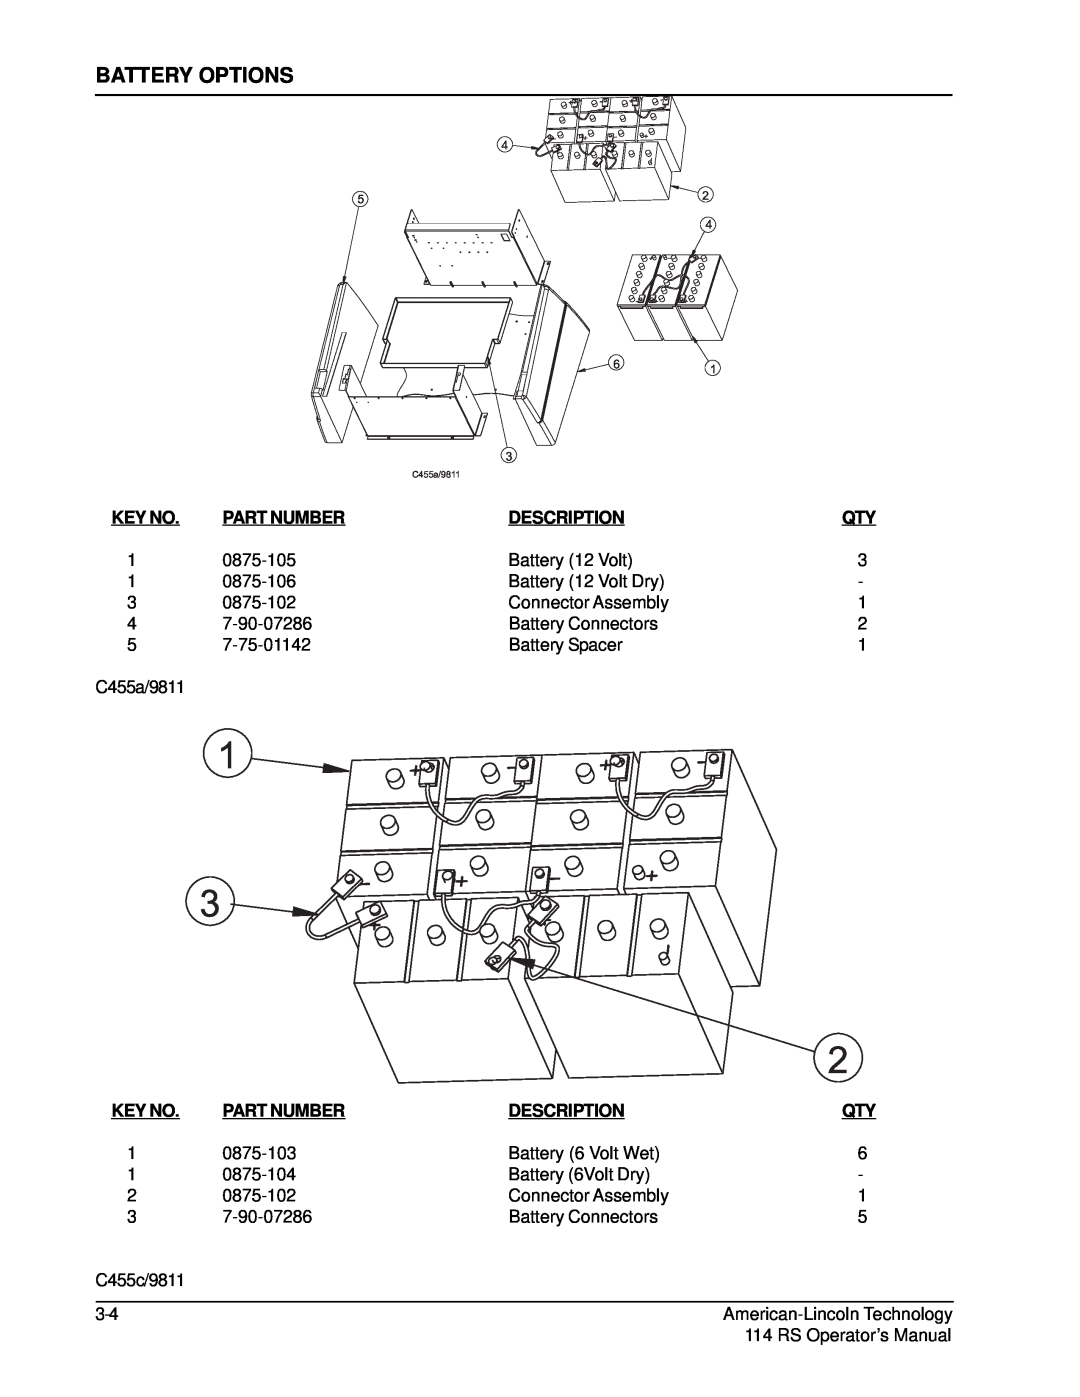 Nilfisk-ALTO 114RS SWEEPER manual Battery Options, Part Number, Description 